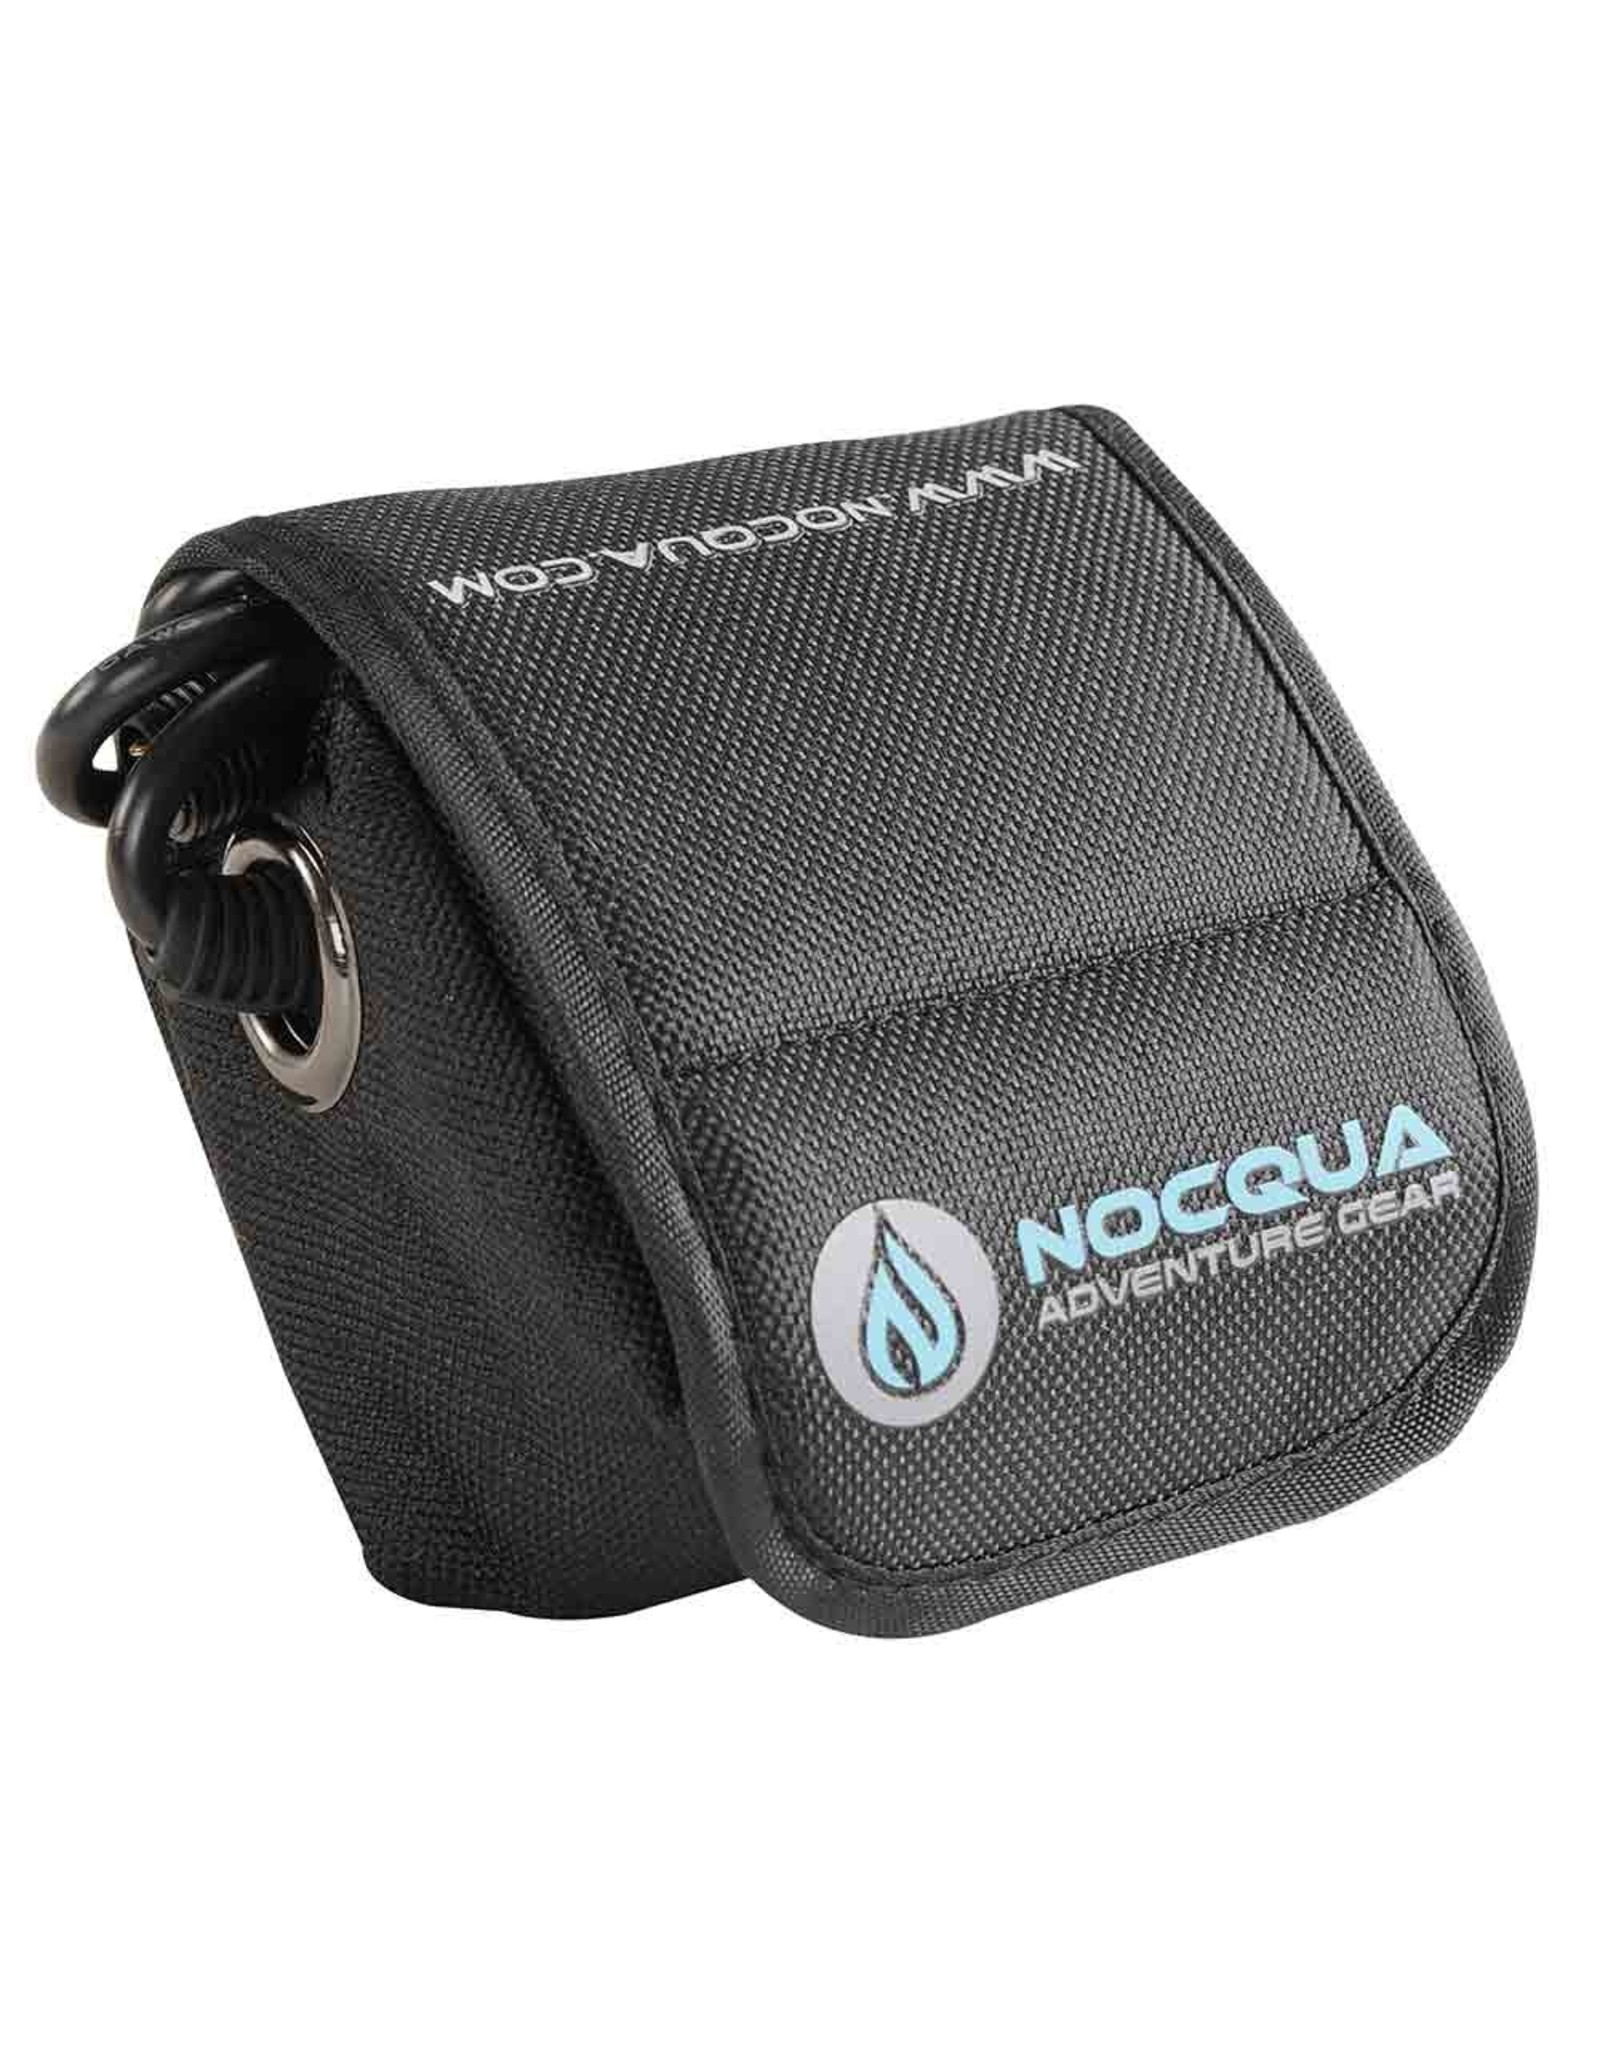 Nocqua Hobie Nocqua Lithium Pro Power Kit 12v 10ah